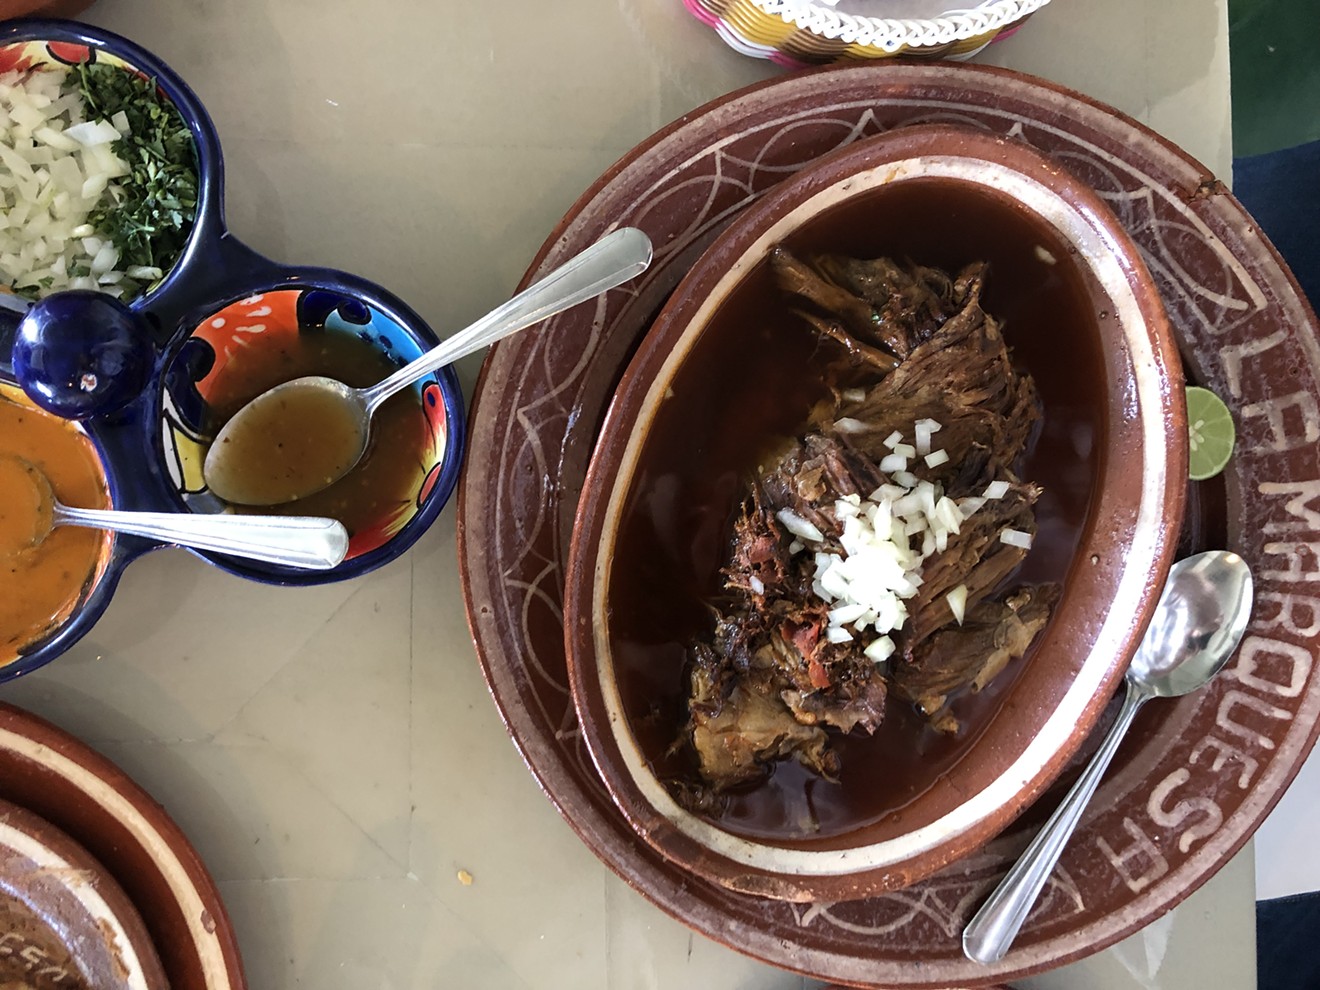 Goat birria tatemada, the Guzman family recipe.